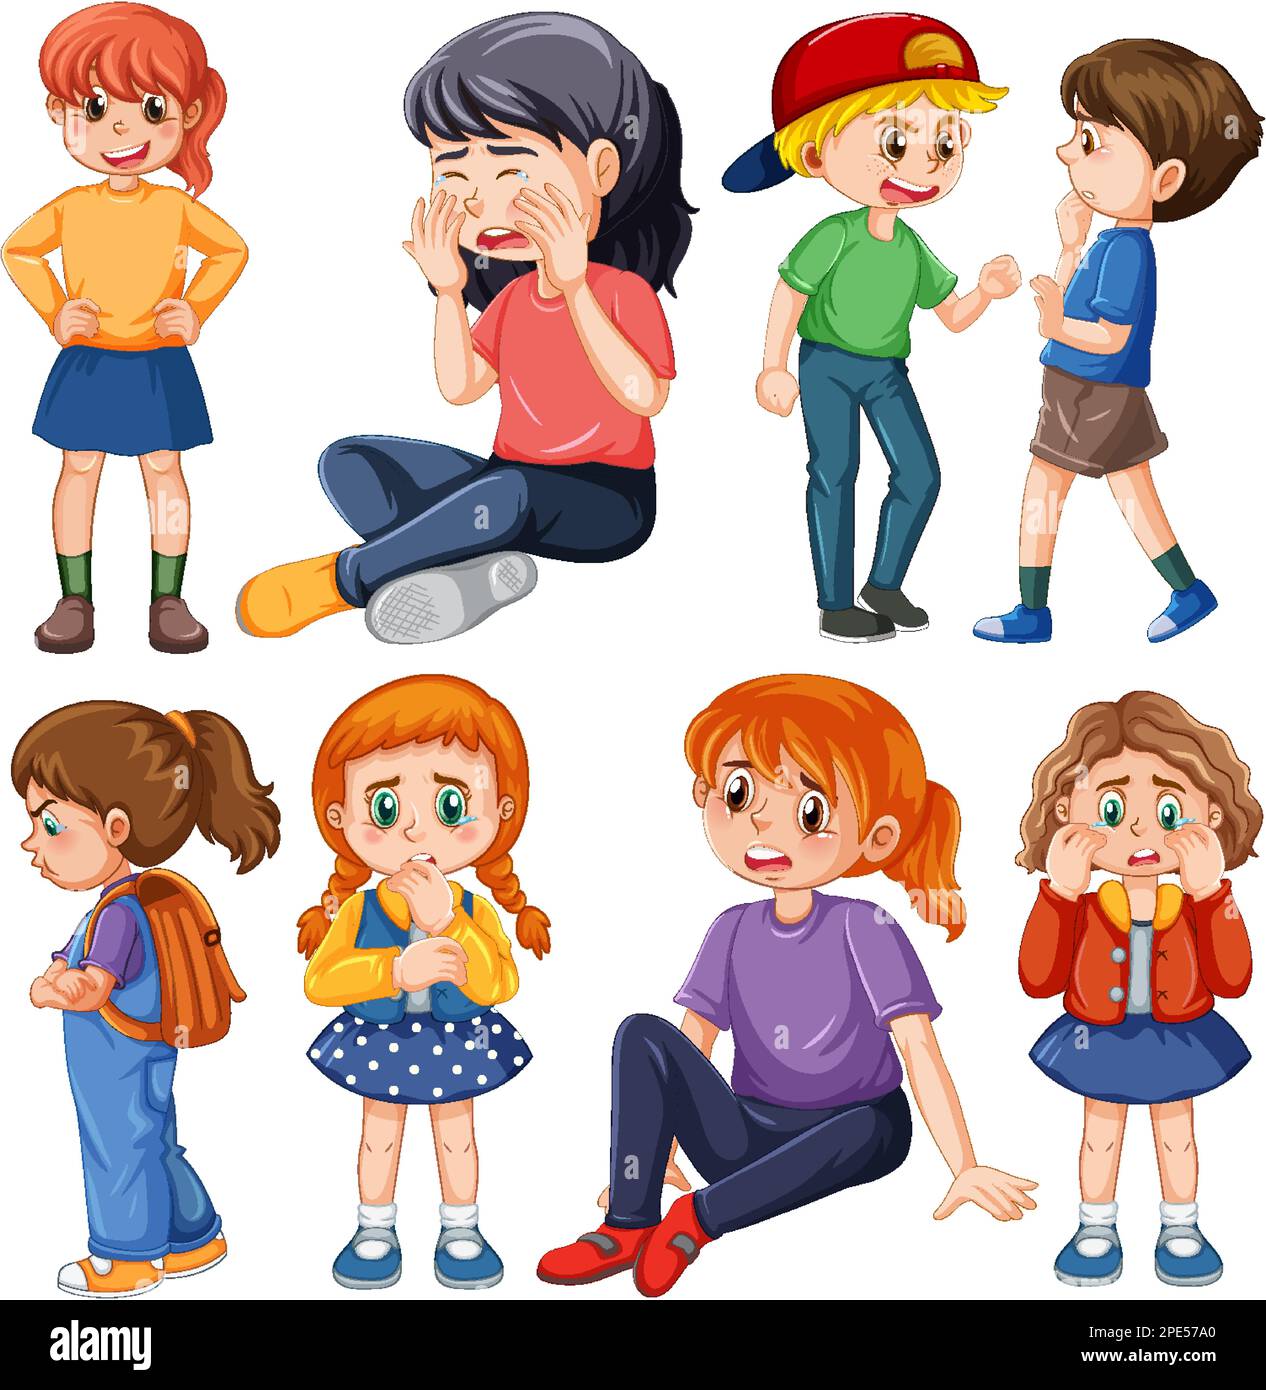 Set von Kindern Cartoon Charakter Illustration Stock Vektor